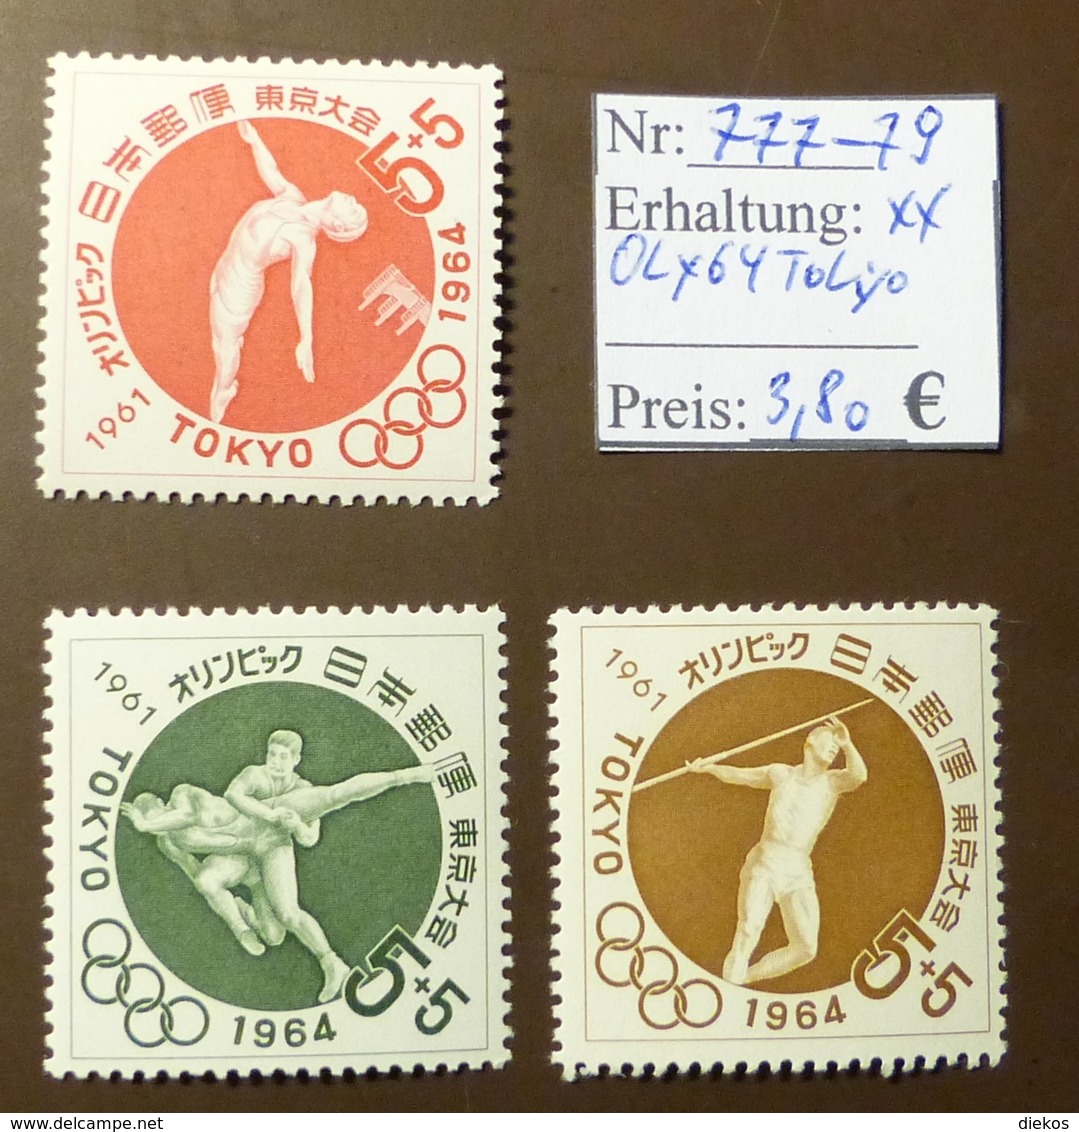 Japan Olympia 1964  MiNr: 777-79  Postfrisch ** MNH     #4910 - Sommer 1964: Tokio